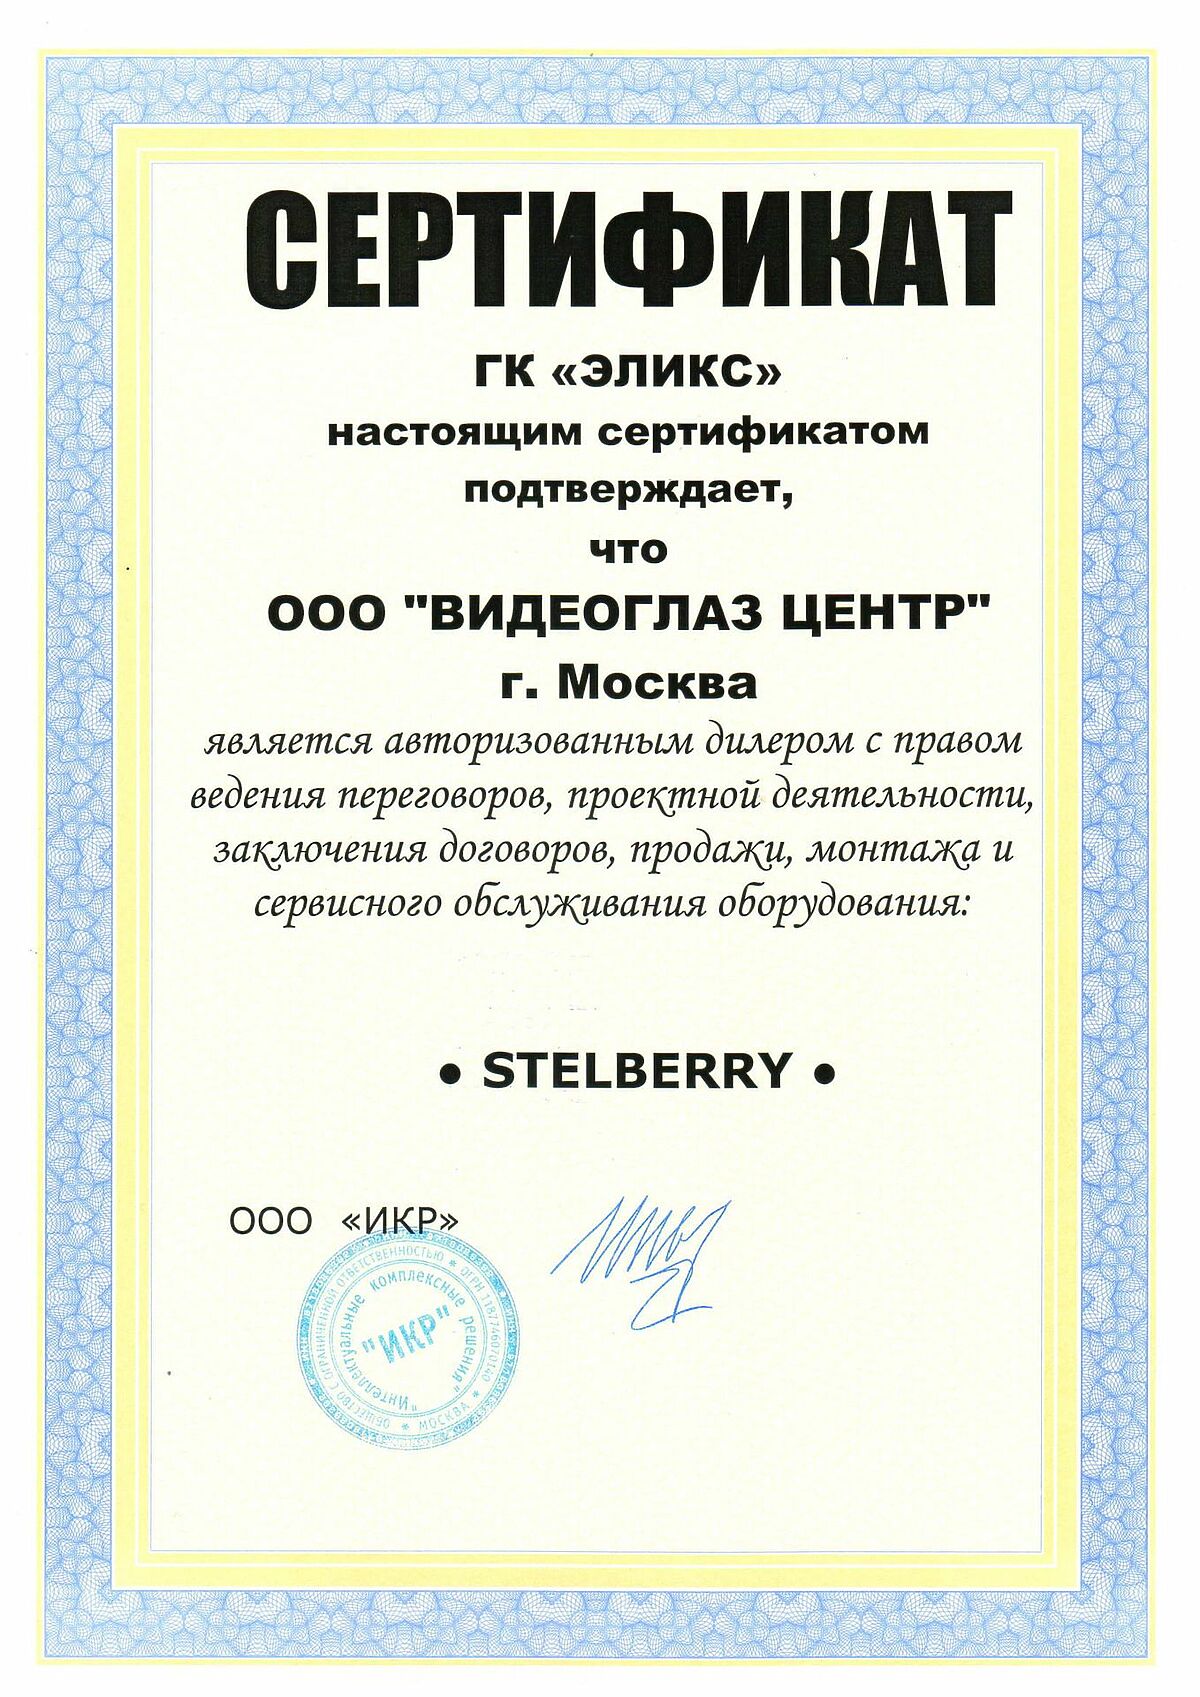 STELBERRY сертификат